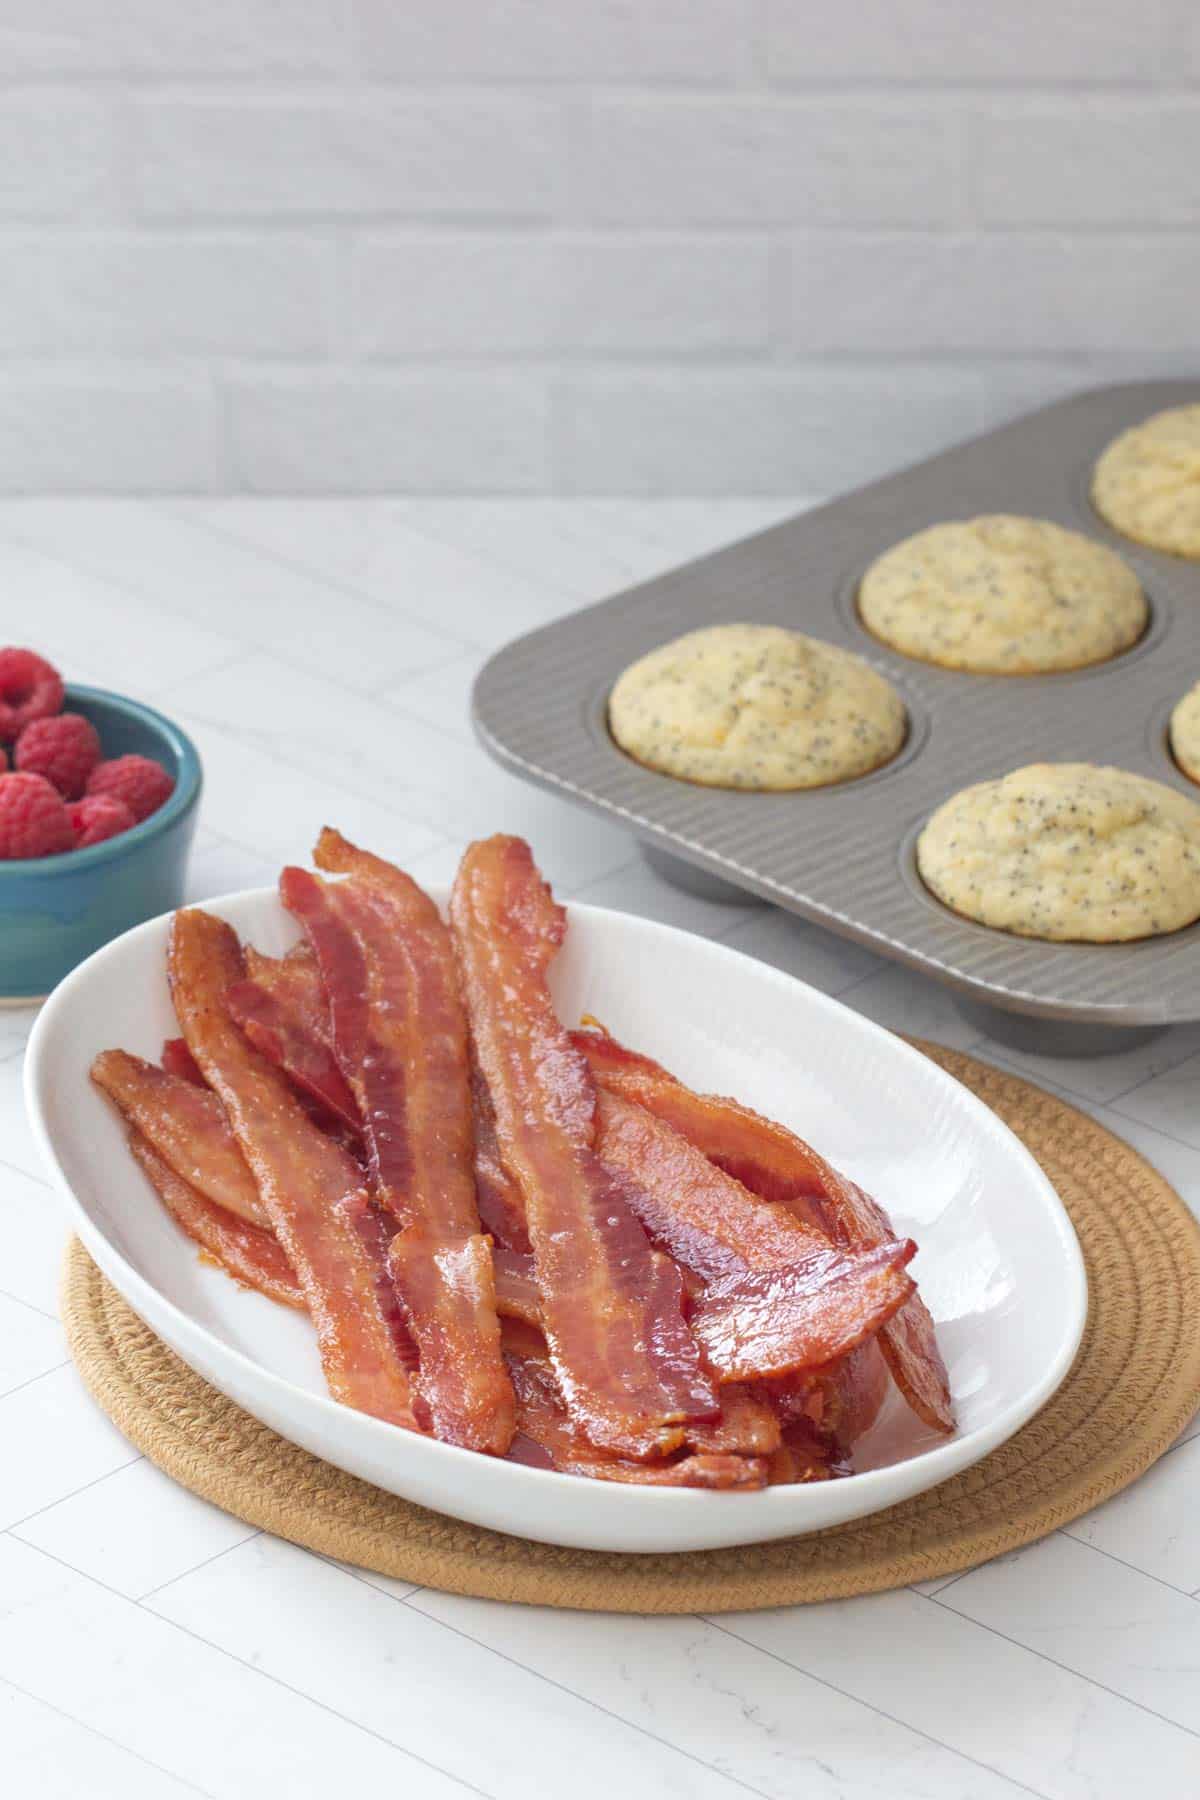 How to Bake Crispy Bacon